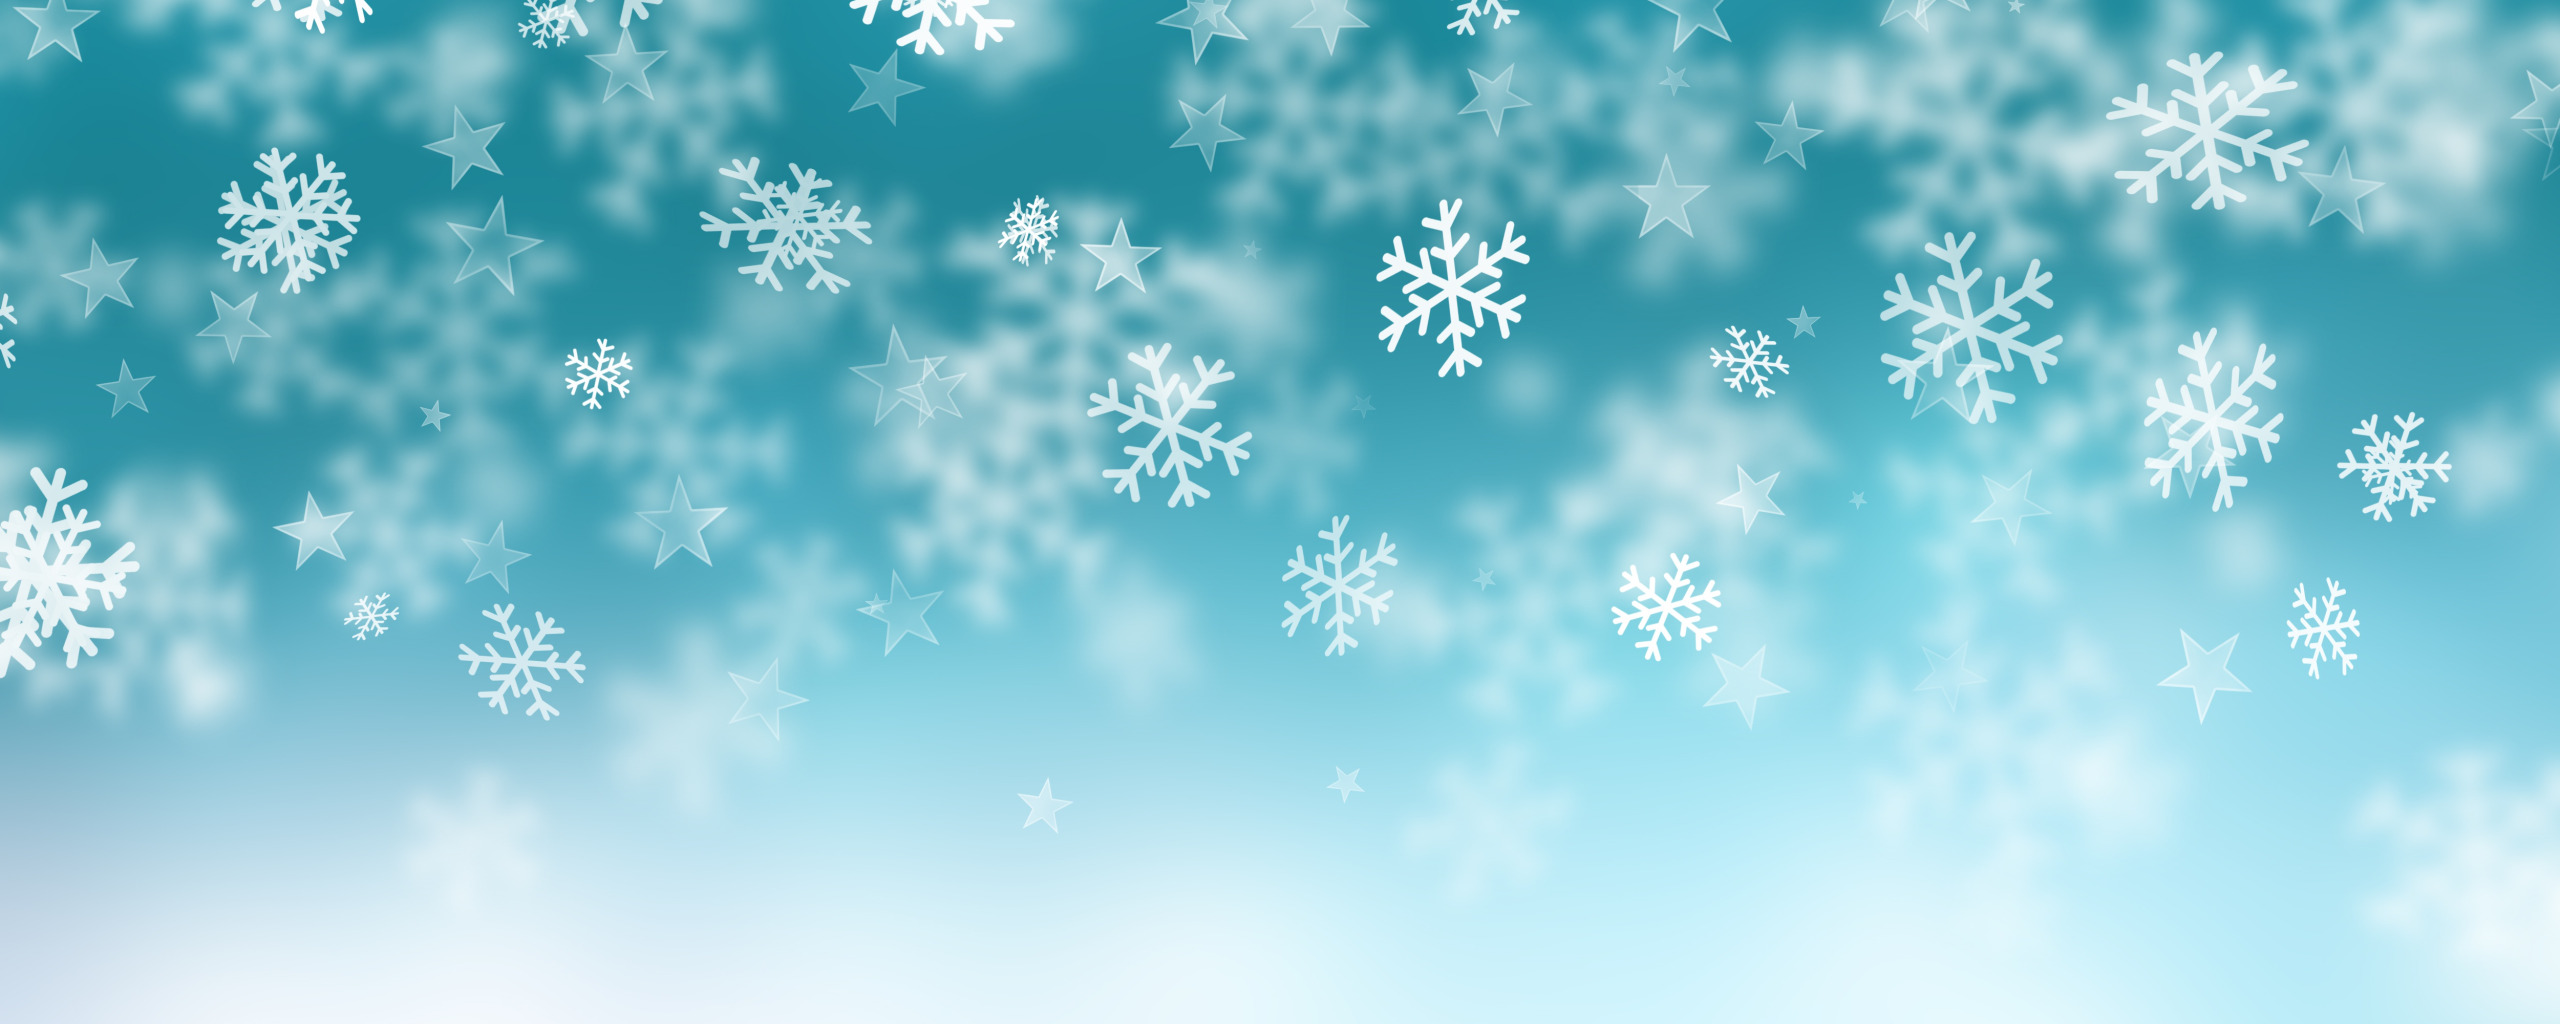 Картинки фон снежинки. Зимний фон снежинки. Новогодний фон снежинки. Голубой фон со снежинками. Фон снежинки на голубом.